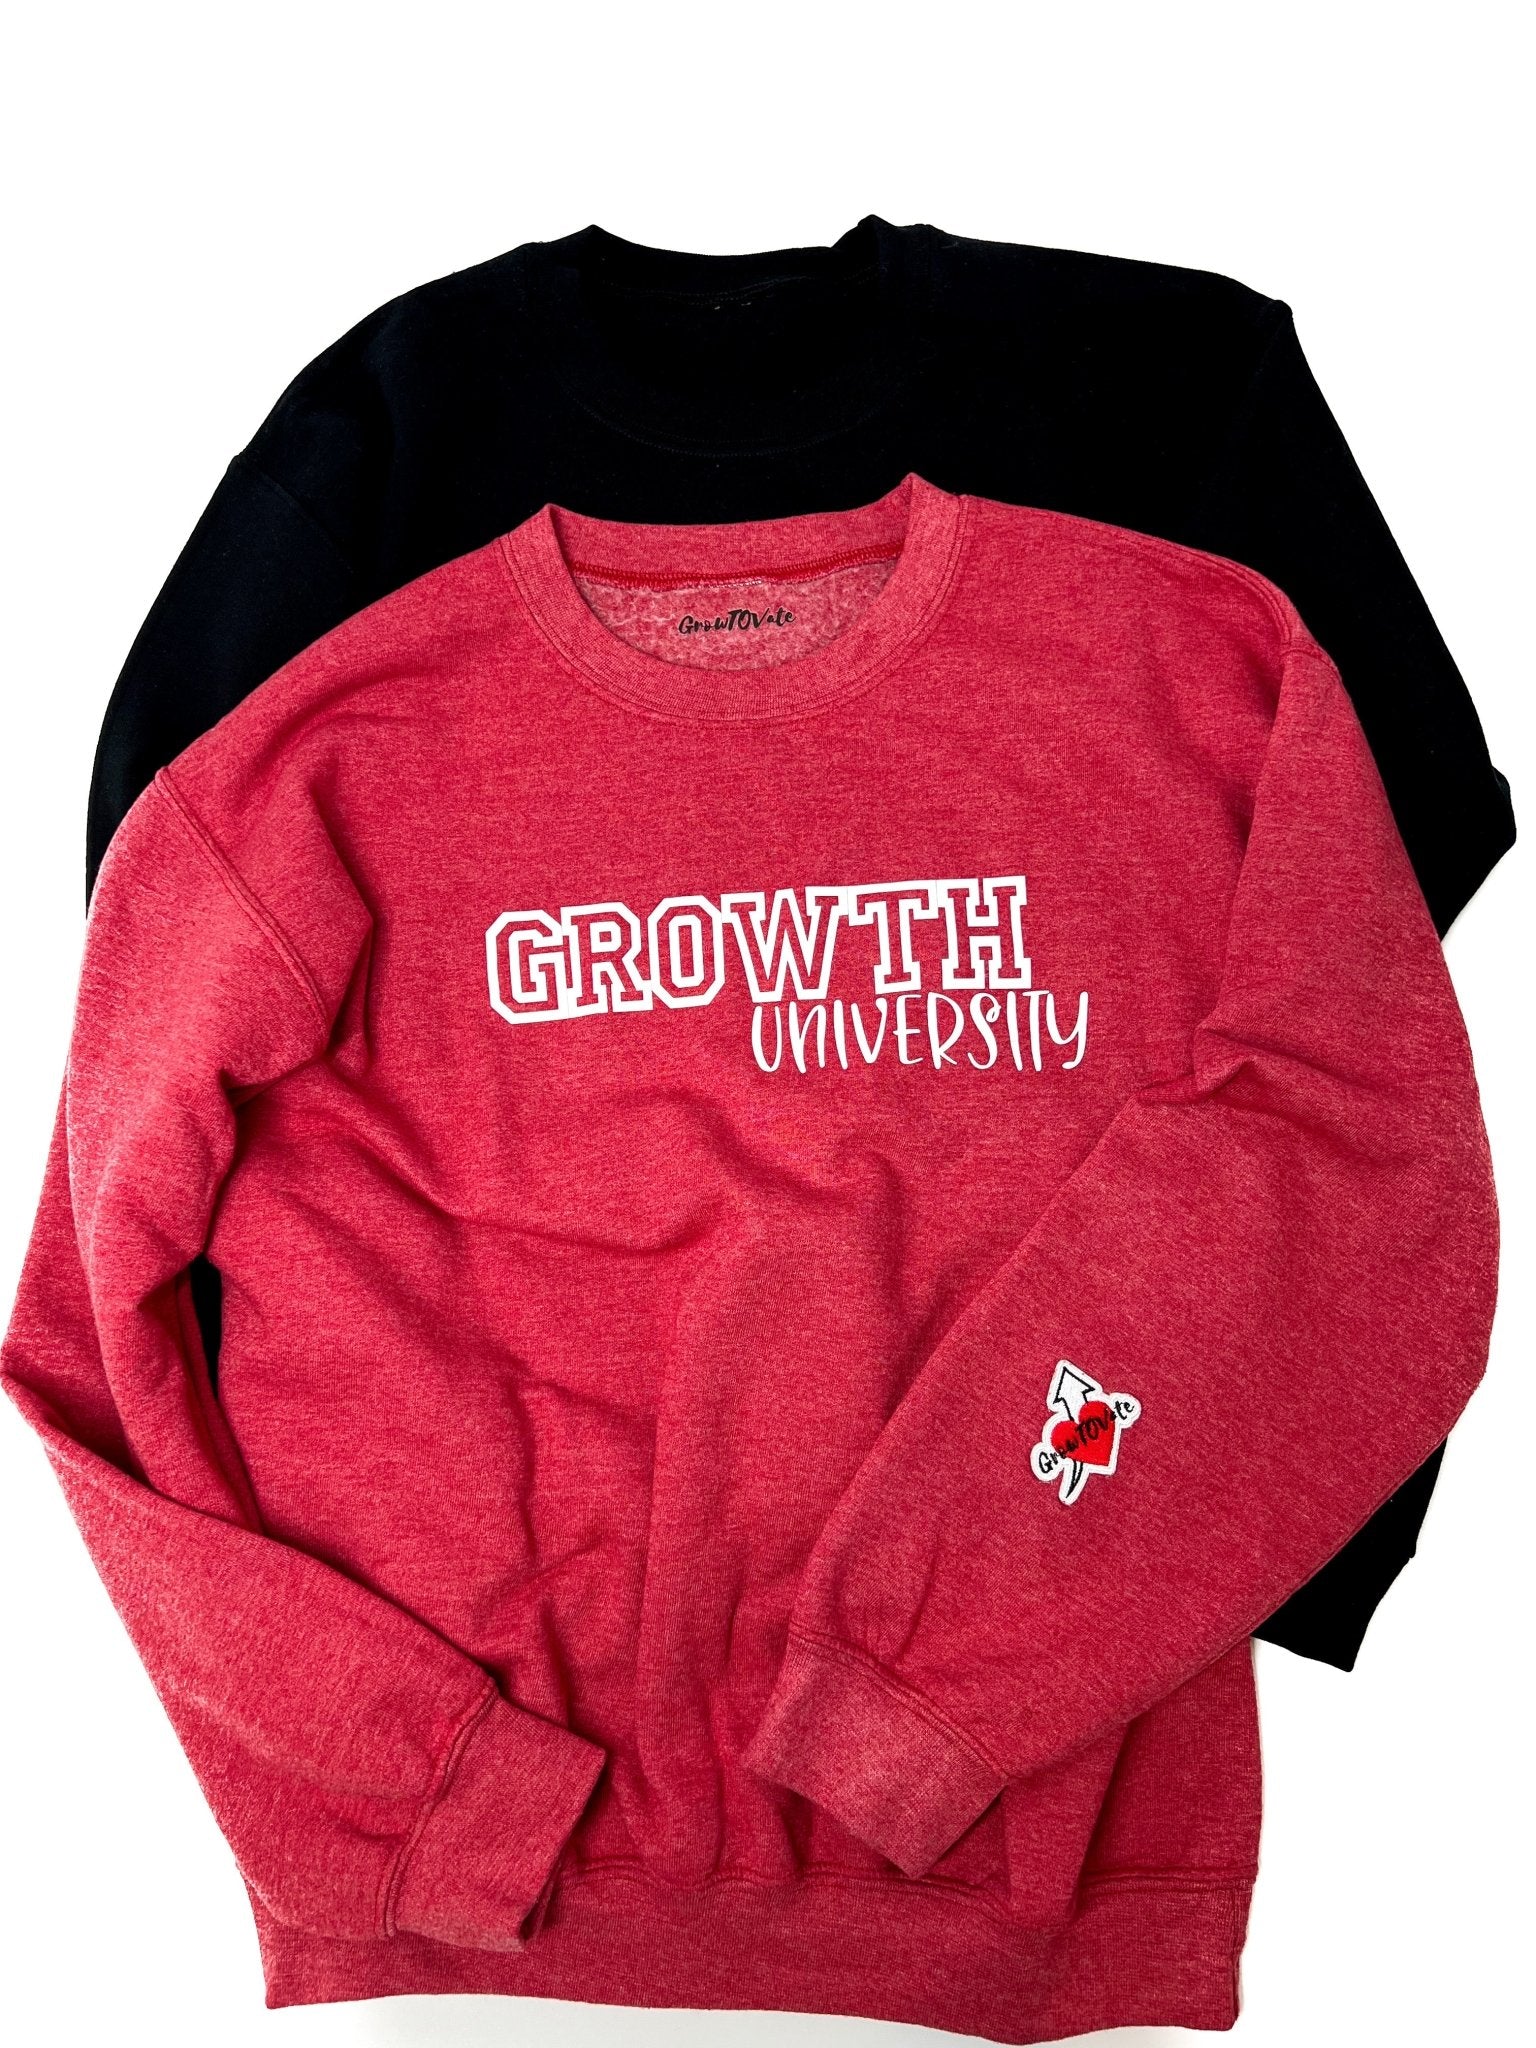 Growth University Sweatshirts & Tees - GrowToVate